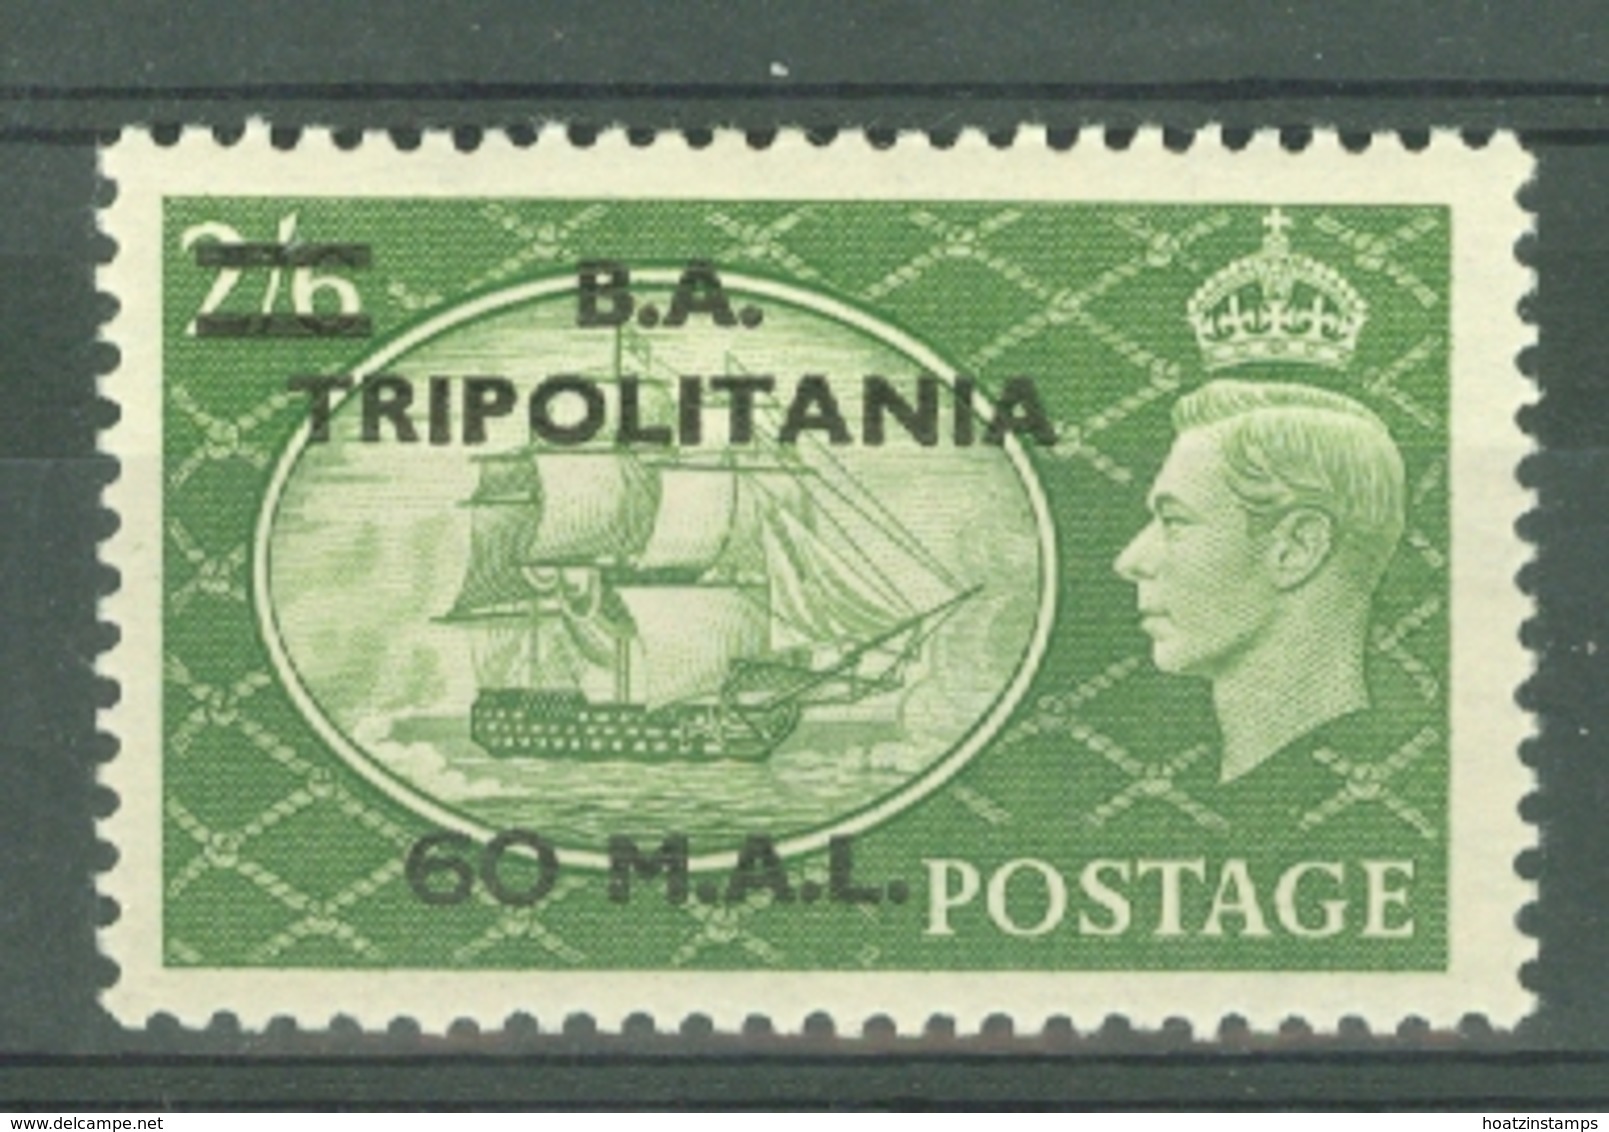 Tripolitania: 1951   KGVI 'B. A. Tripolitania' OVPT   SG T32    60l On 2/6d    MH - Tripolitaine